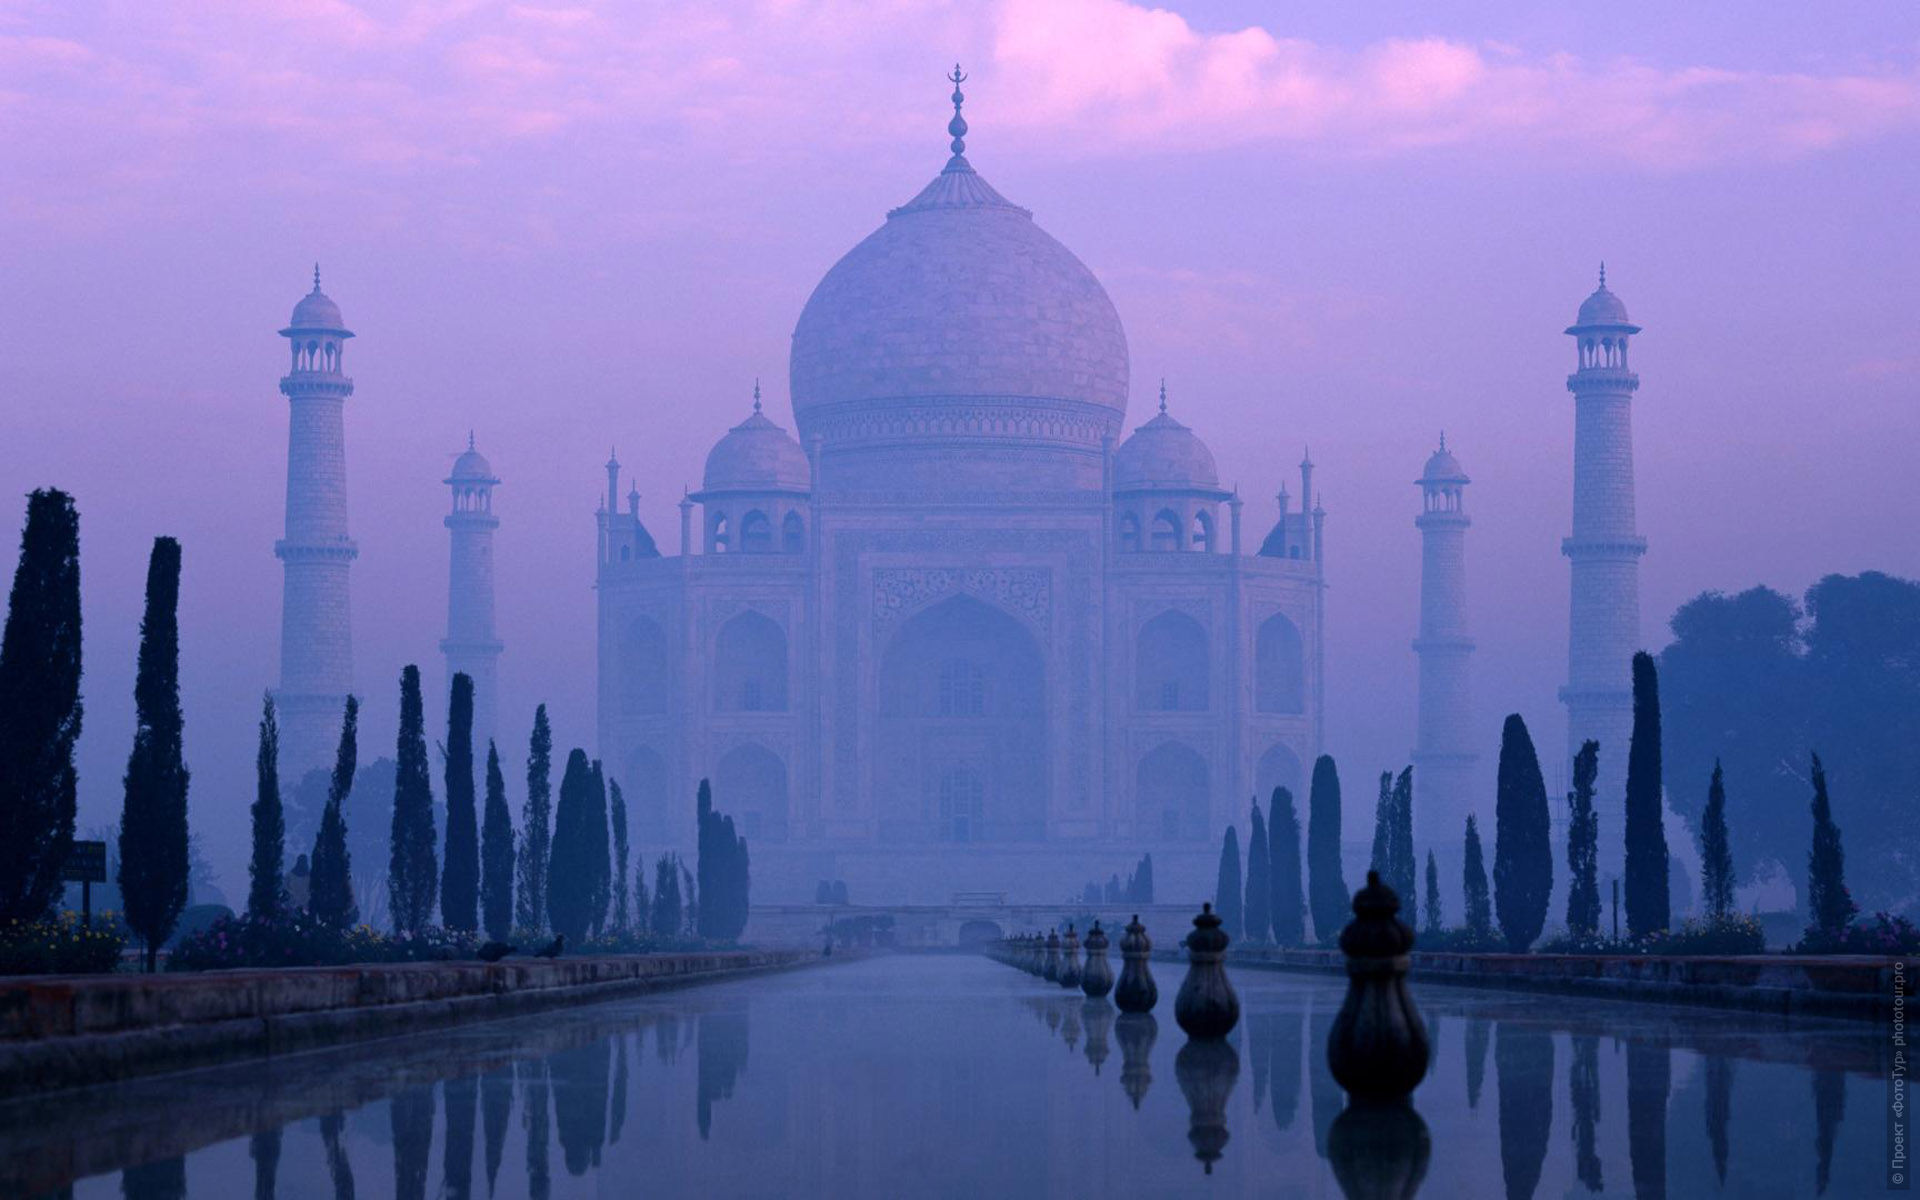 Taj Mahal, Agra, India tour, September 2019.